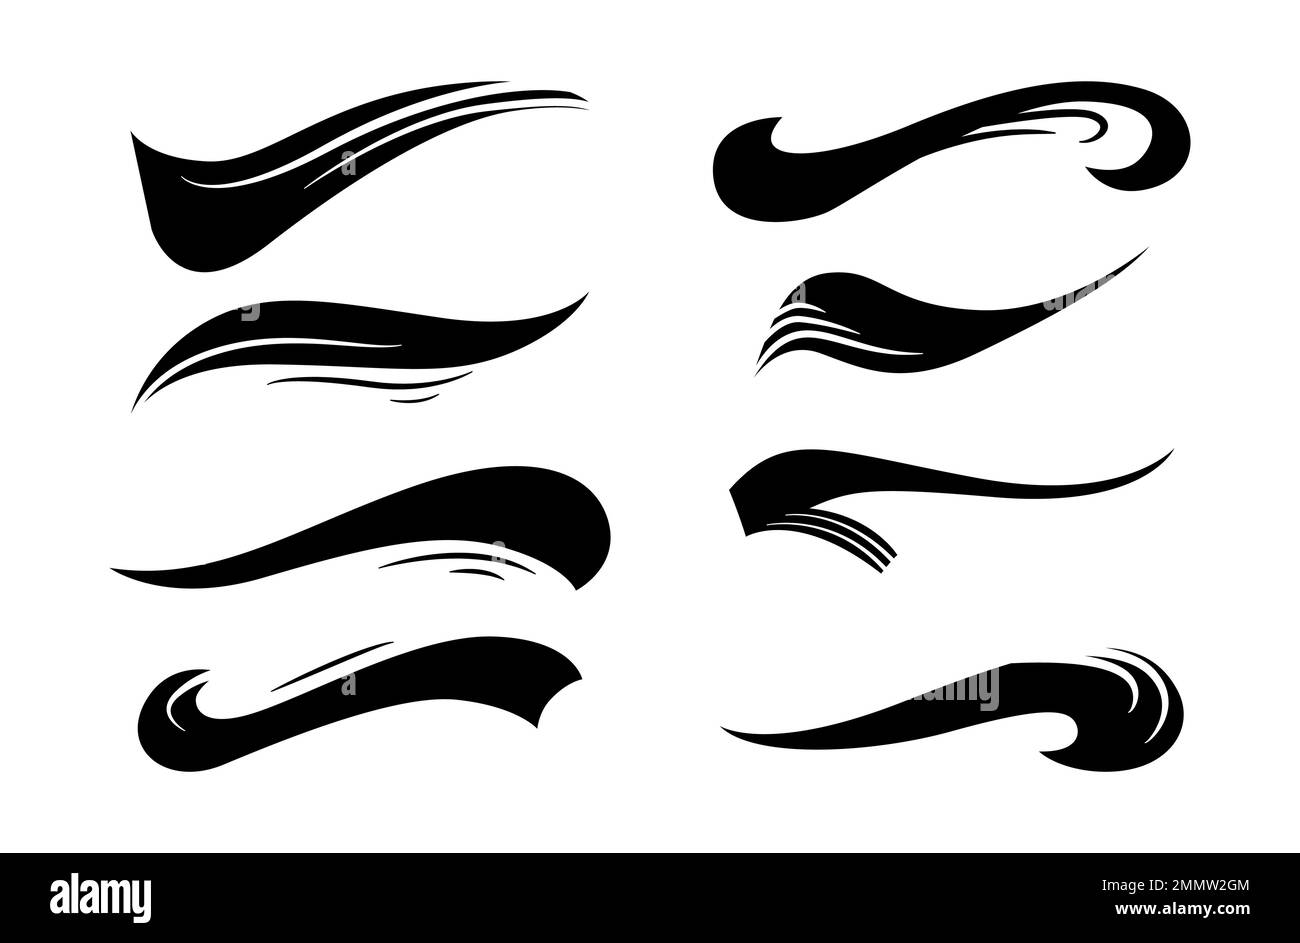 Premium Vector  Underline swishes tail collection swoosh element for sport  logo design vector hand drawn illustratio